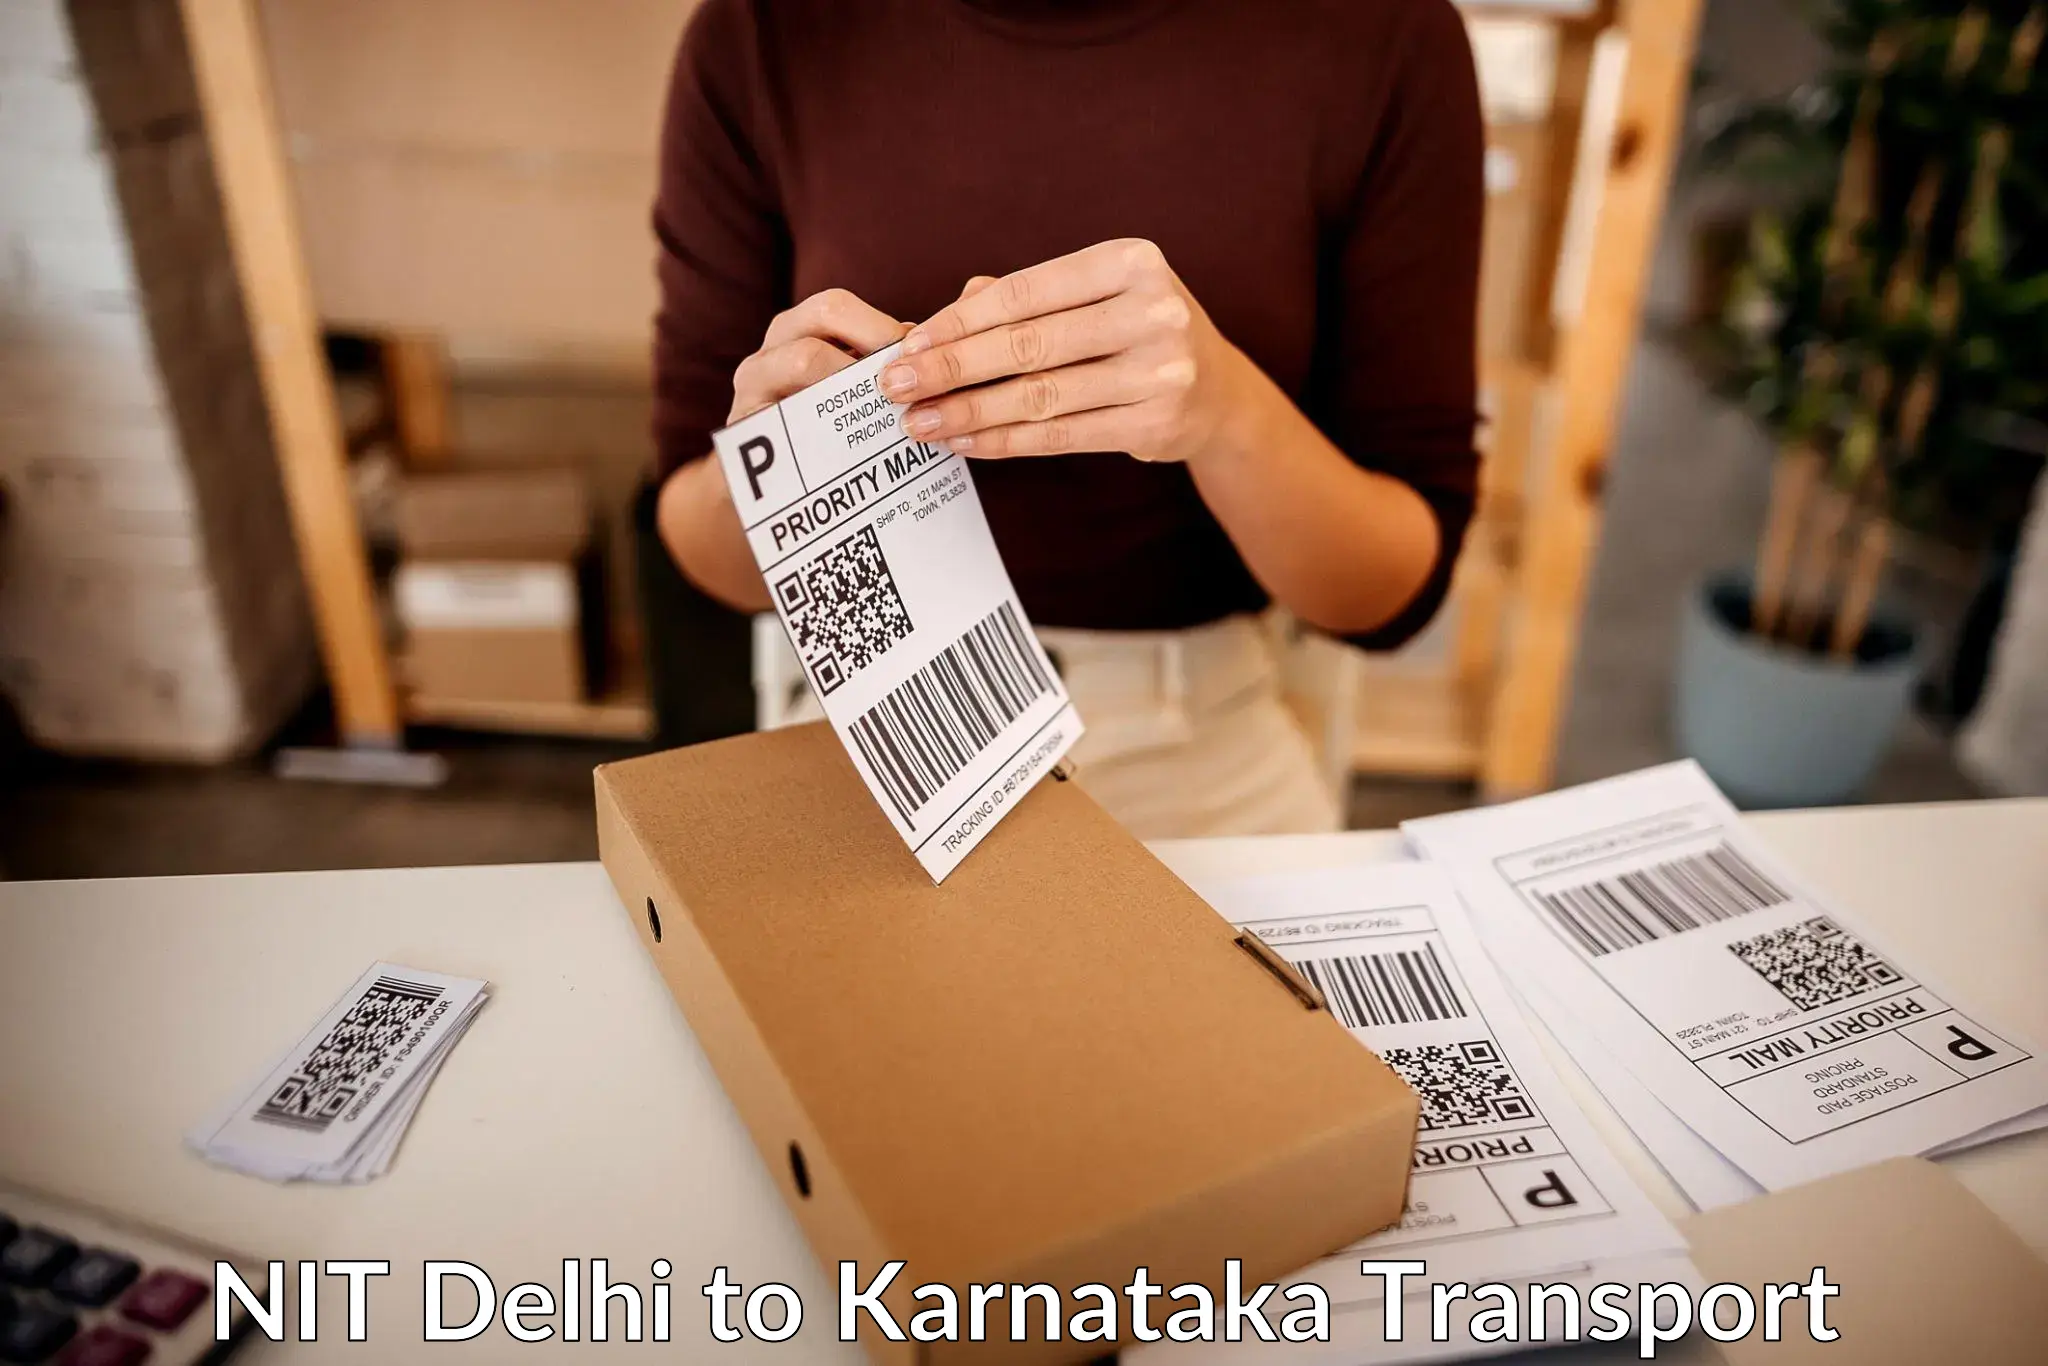 Goods delivery service NIT Delhi to Kolar